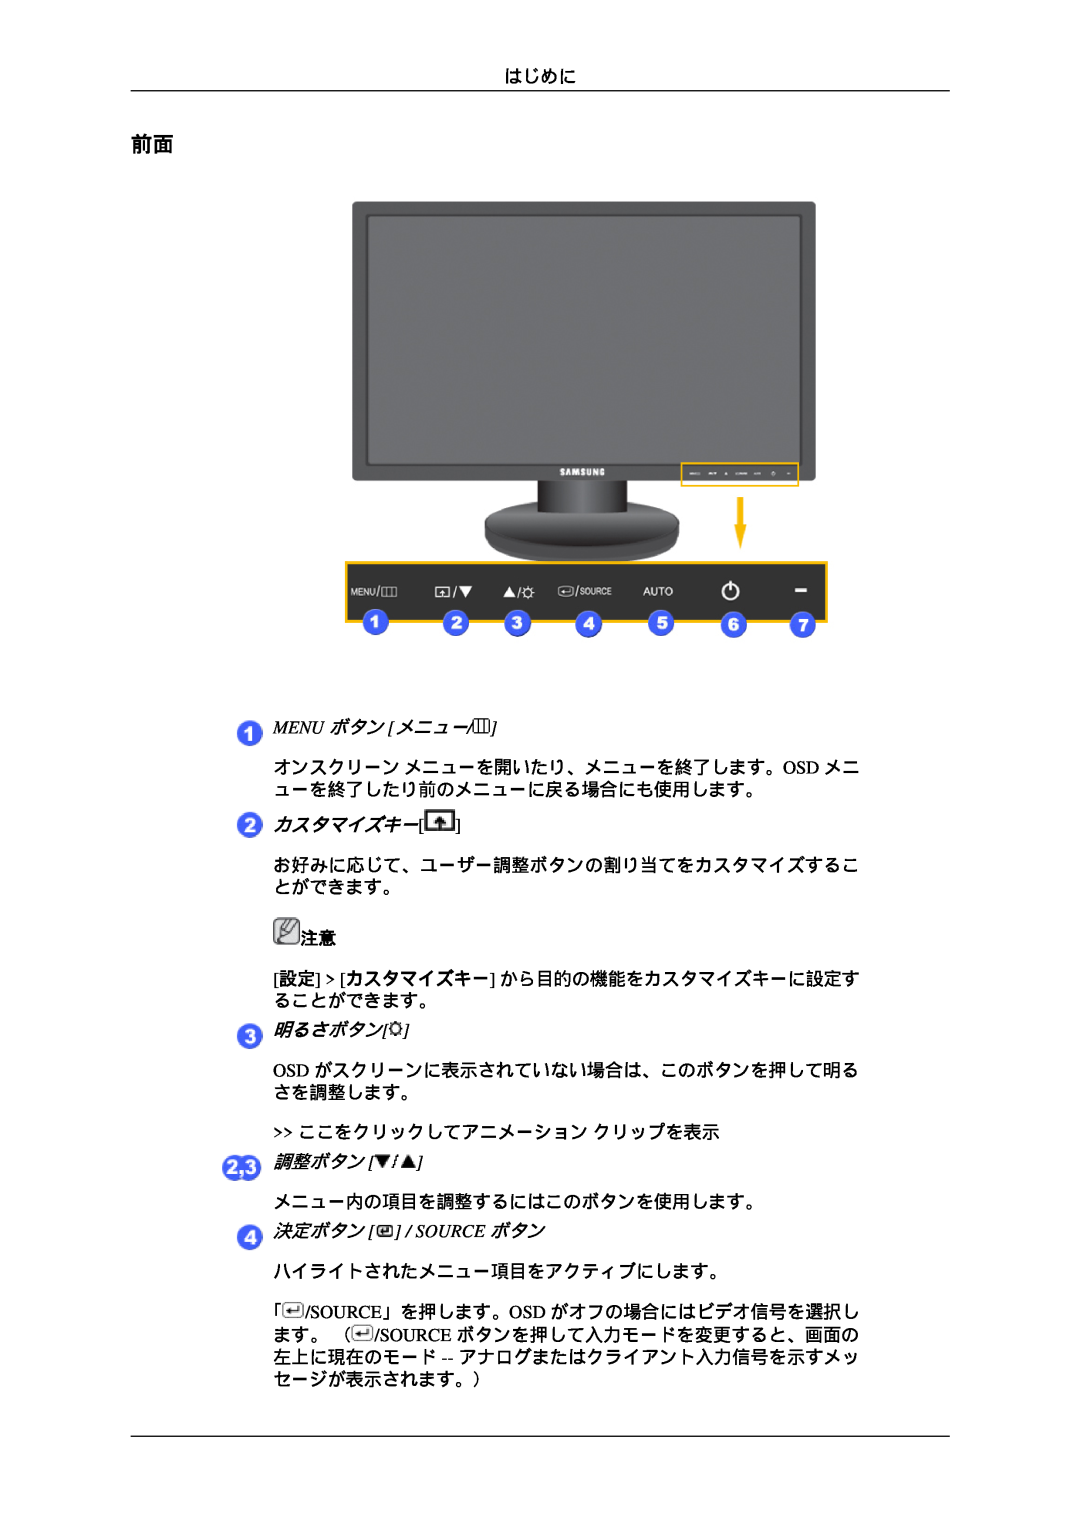 Samsung LS23MYZKBQ/XSJ manual Menu ボタン メニュー, 決定ボタン / Source ボタン, カスタマイズキー, 明るさボタン 